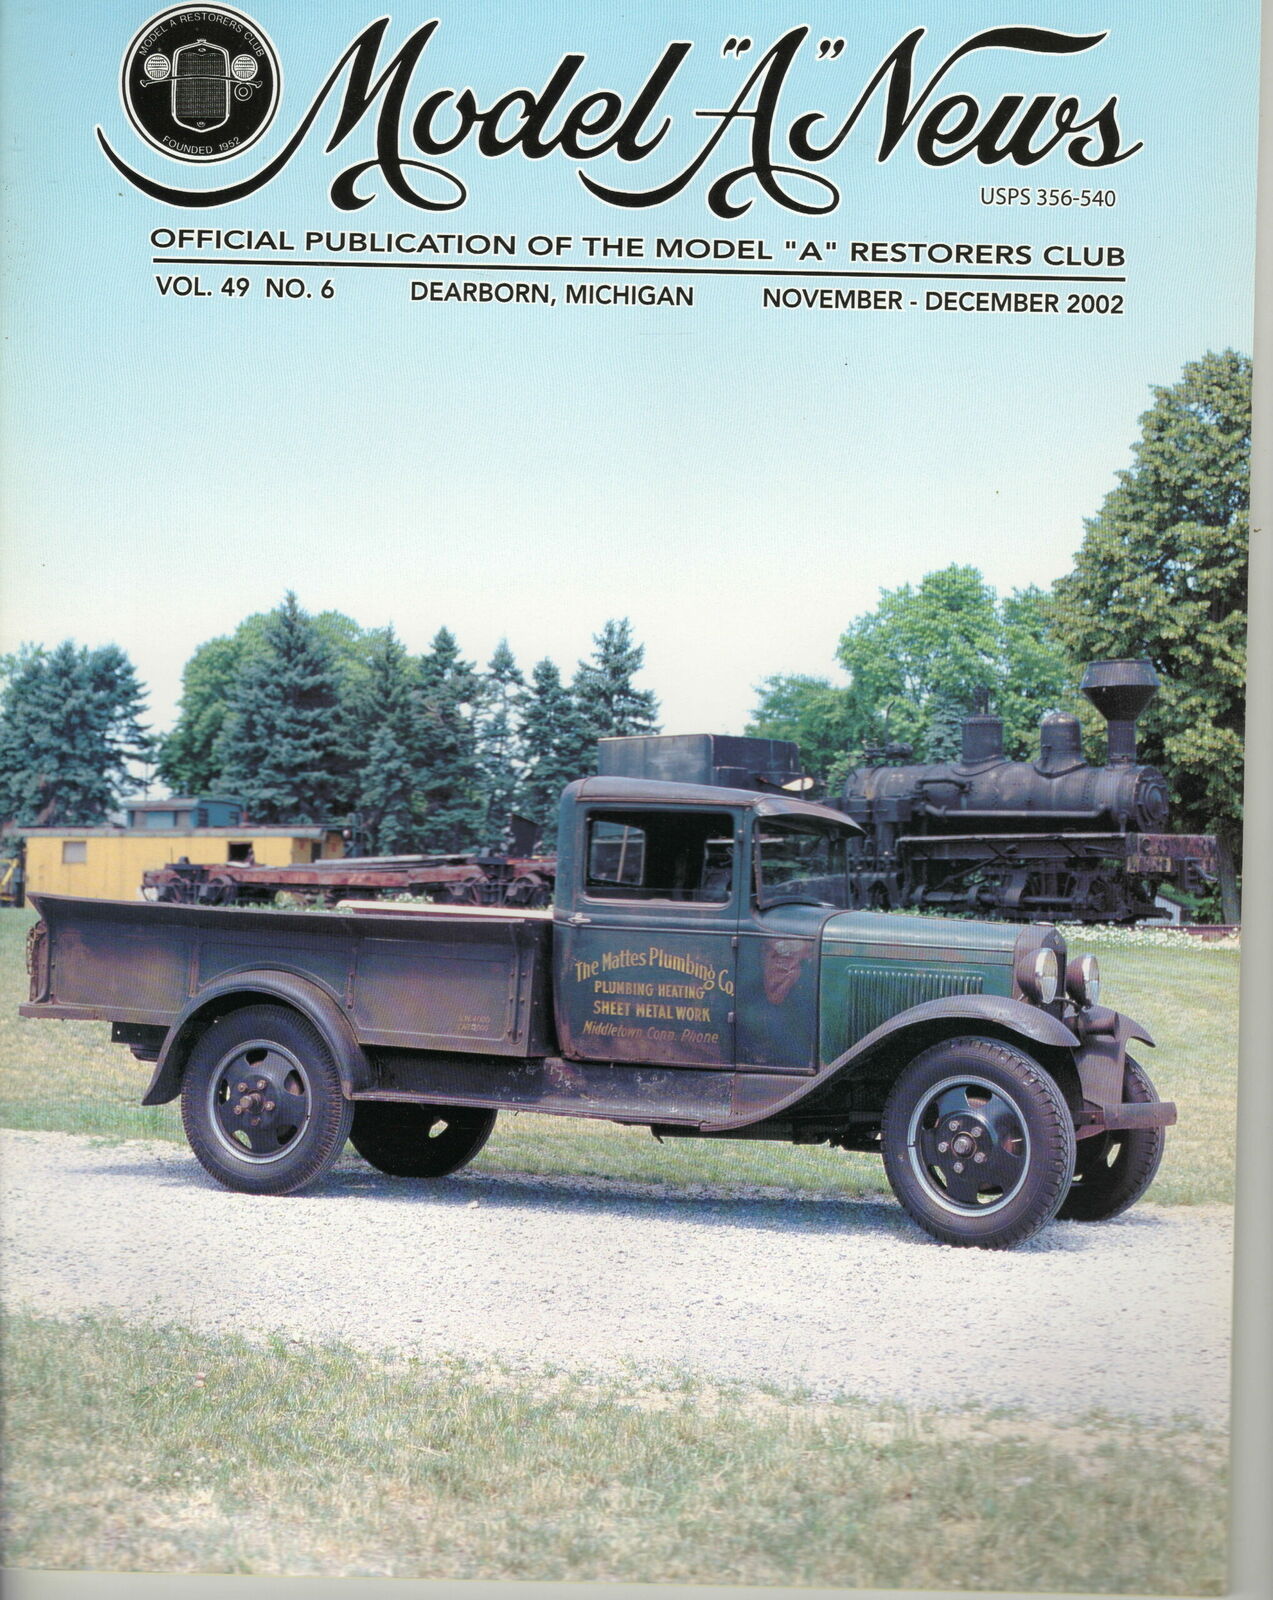 1931 AA EXPRESS - MODEL “A” NEWS OFFICIAL PUBLICATION VOL.49 NO.6 2002 MAGAZINE